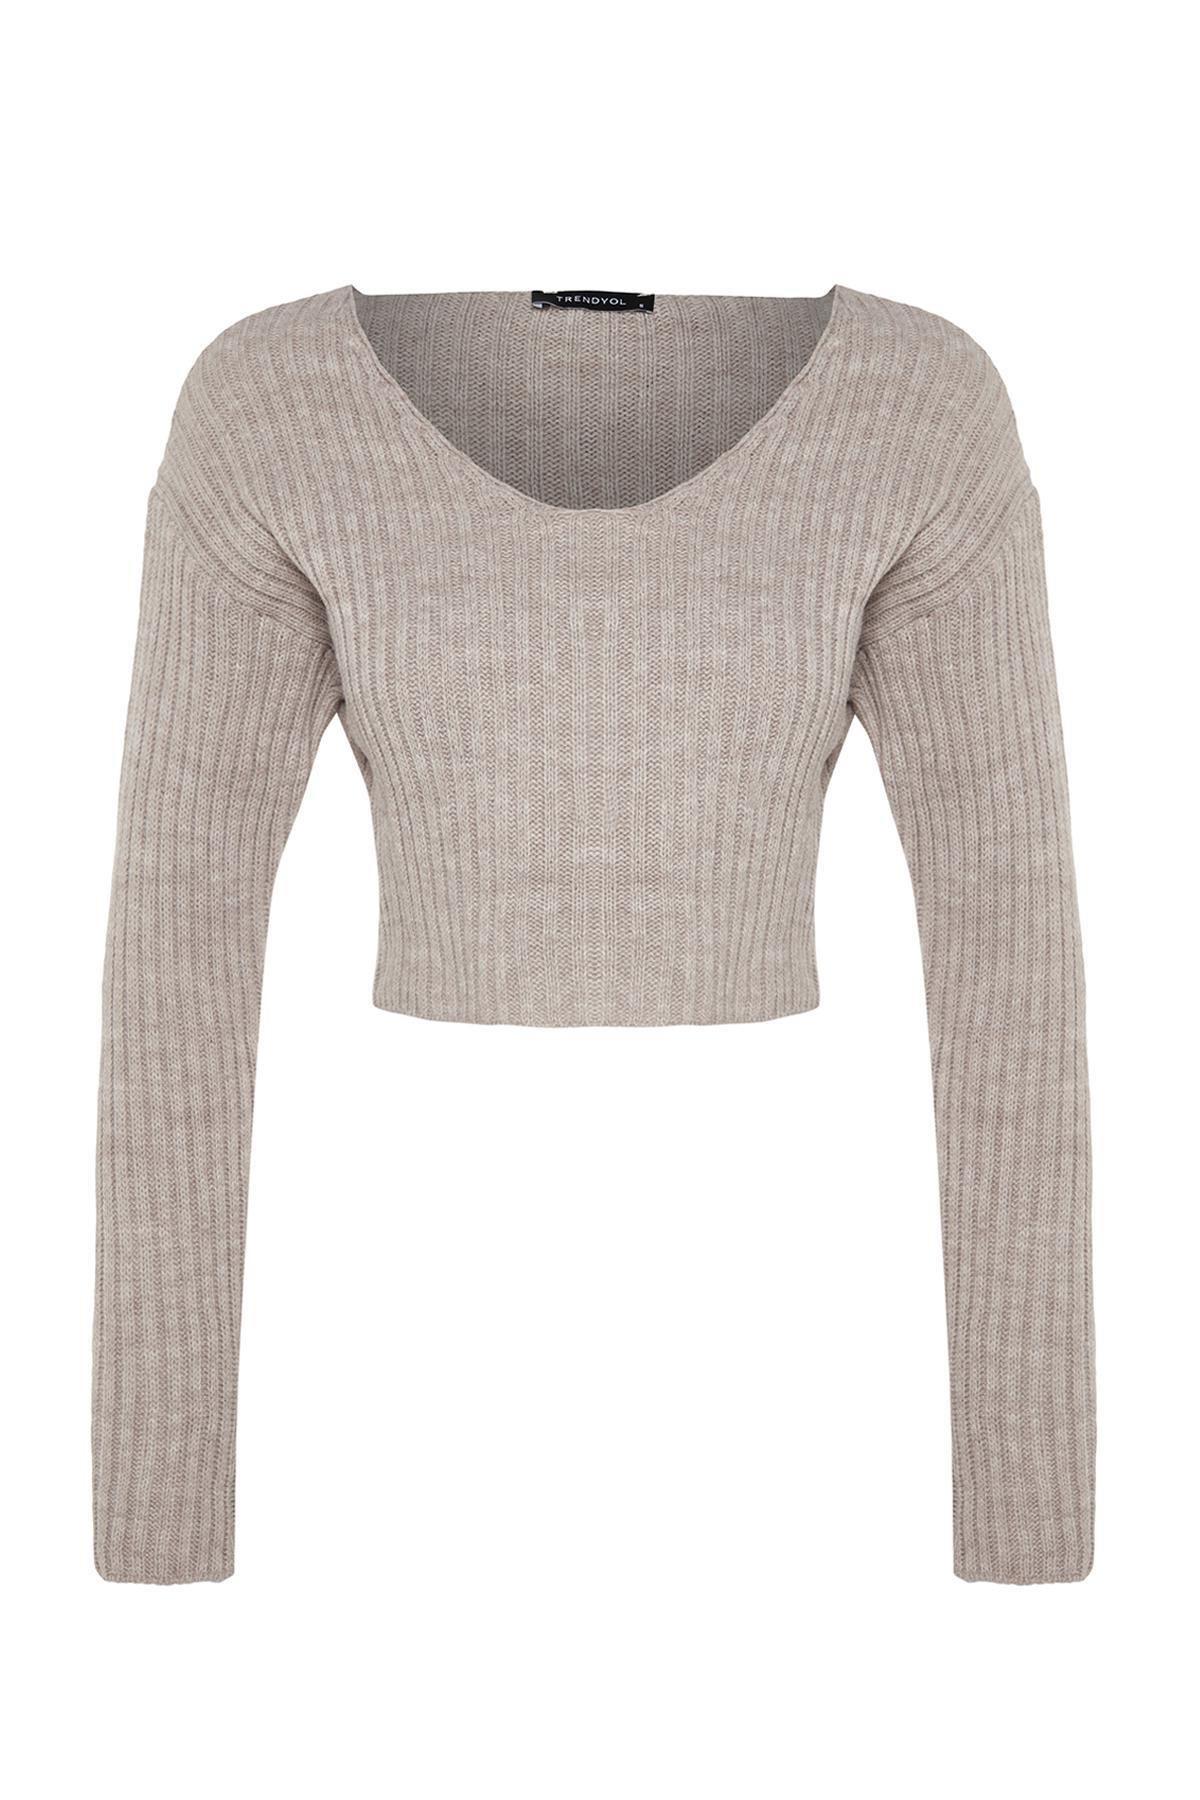 Trendyol - Beige V-Neck Cropped Knitted Sweater